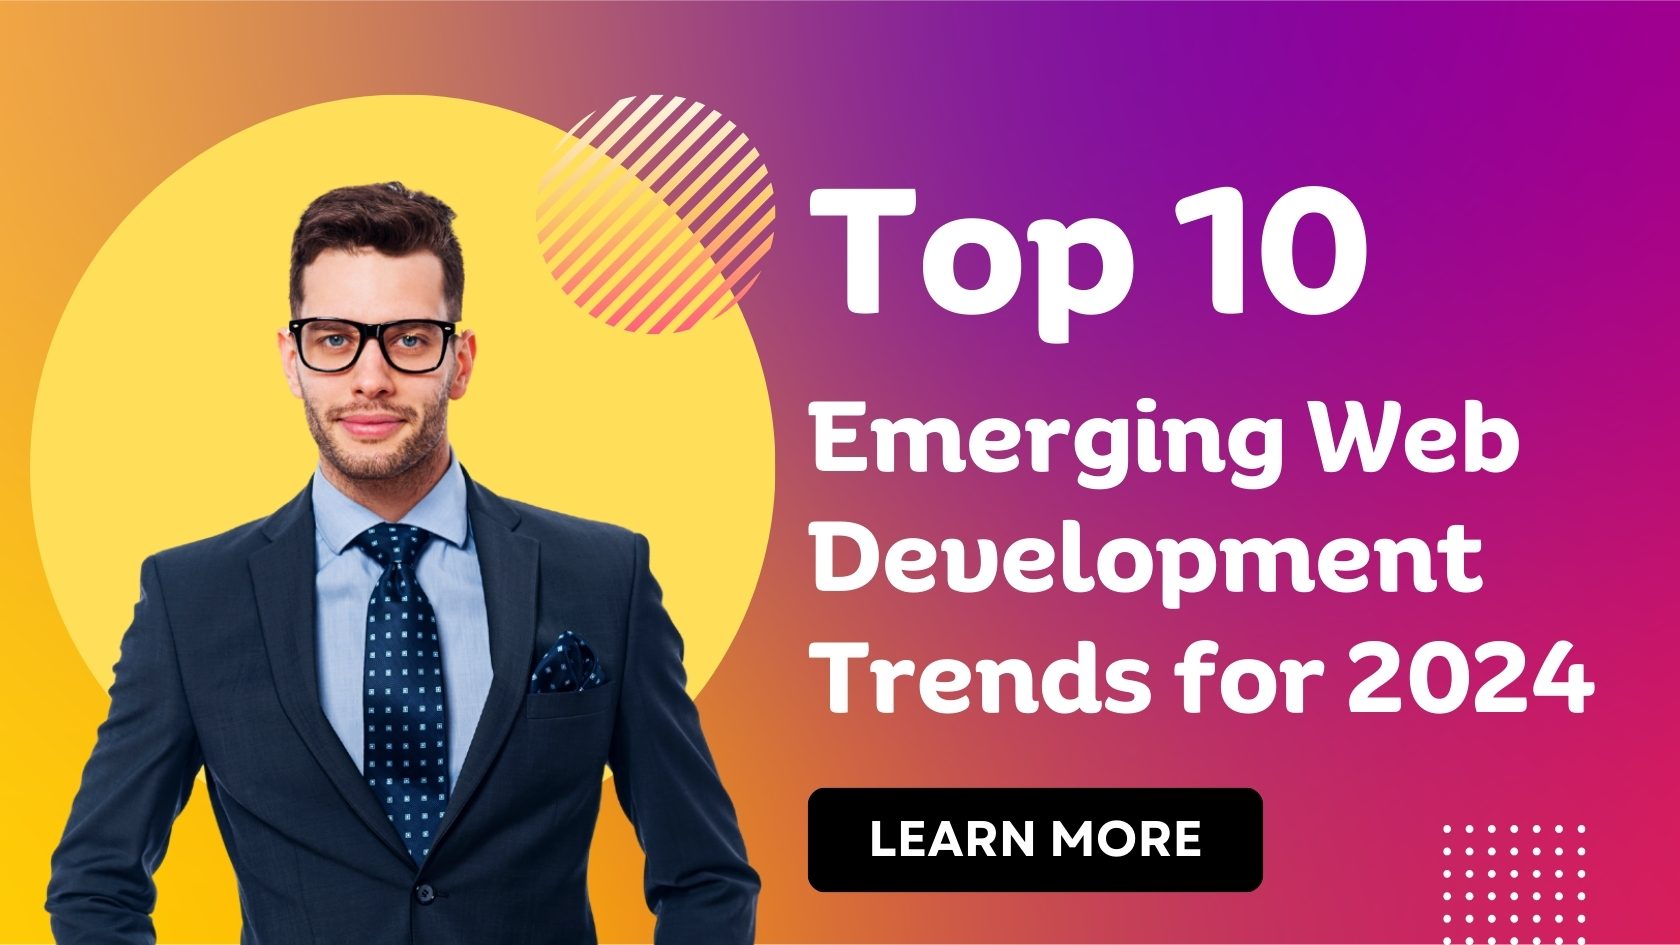 Top 10 Emerging Web Development Trends for 2024 - Infosky Solutions Blog